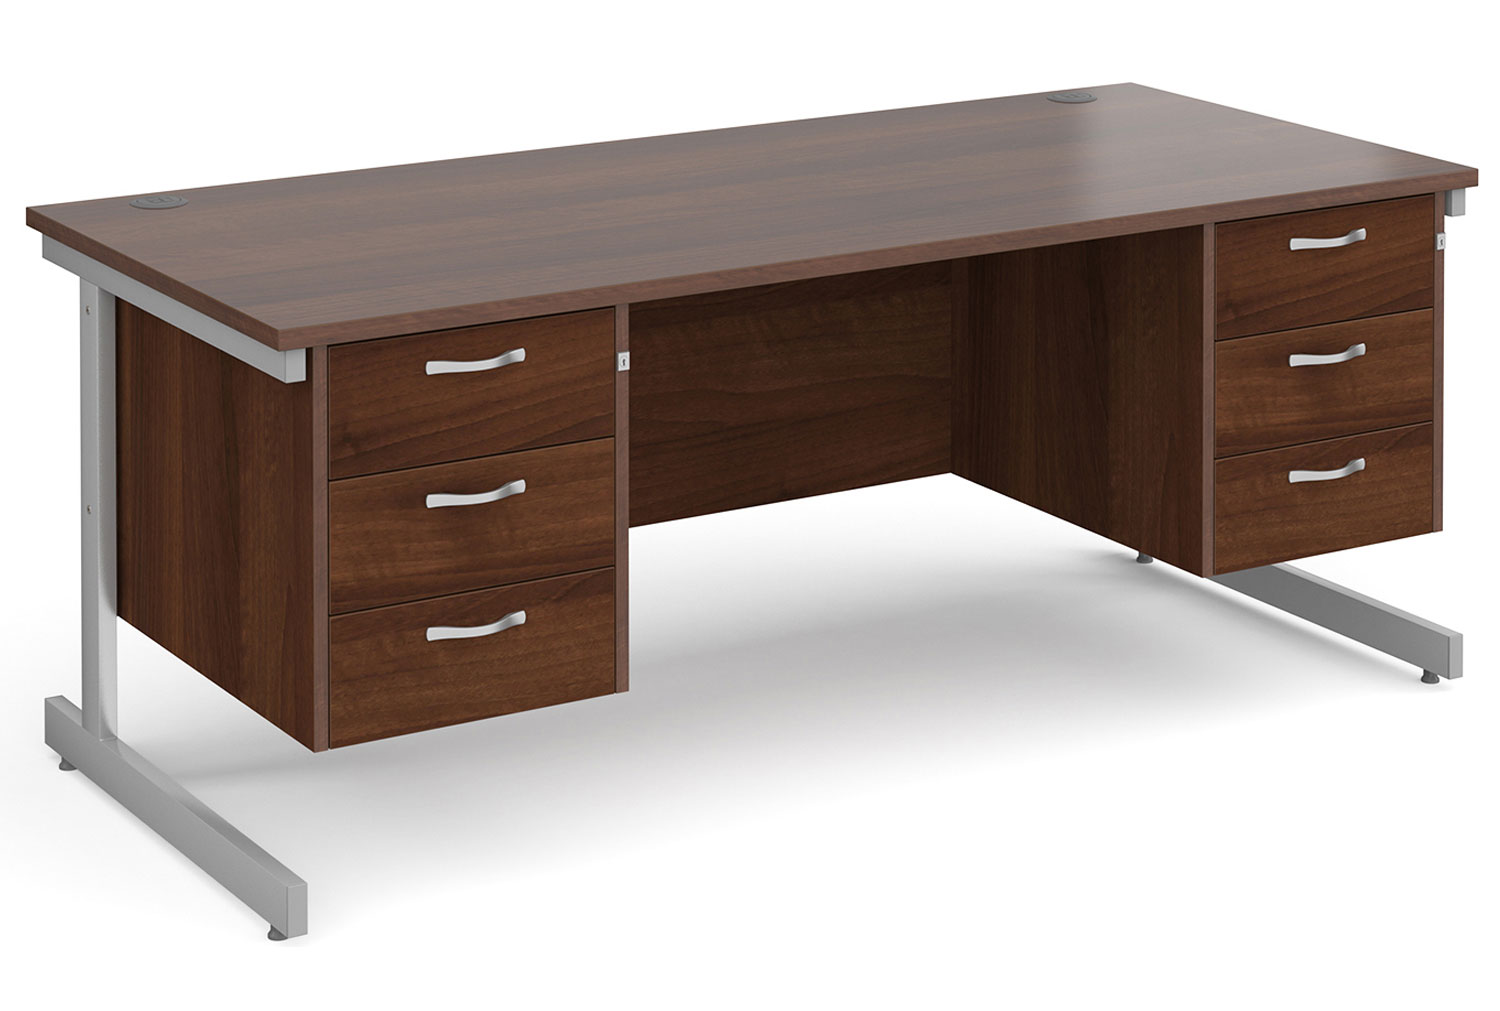 All Walnut C-Leg Executive Office Desk 3+3 Drawers, 180wx80dx73h (cm)